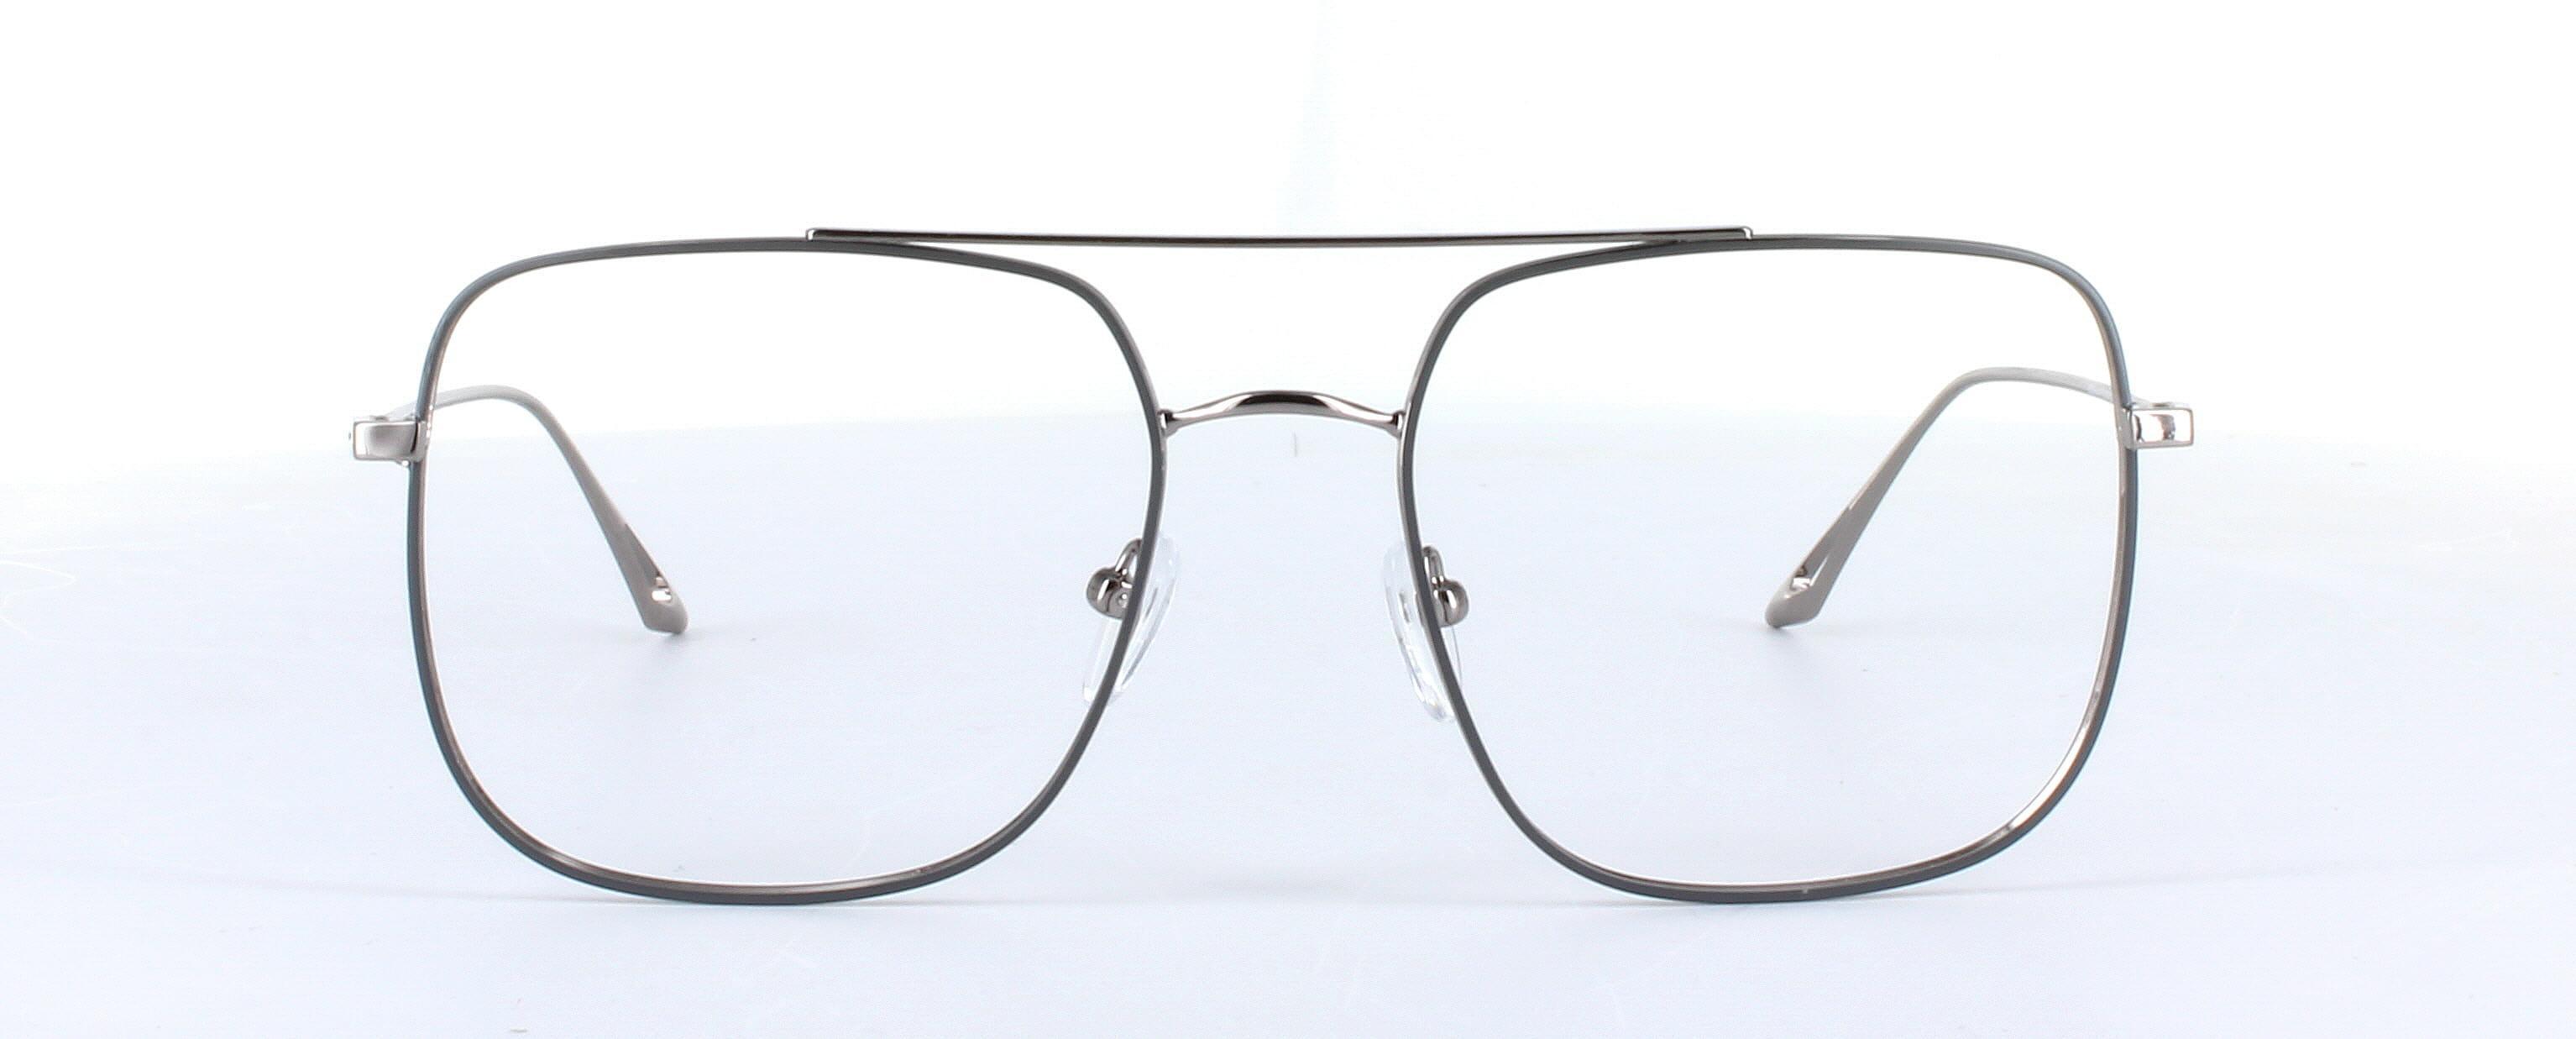 Eyecroxx 637-C1 Black Full Rim Aviator Metal Glasses - Image View 5